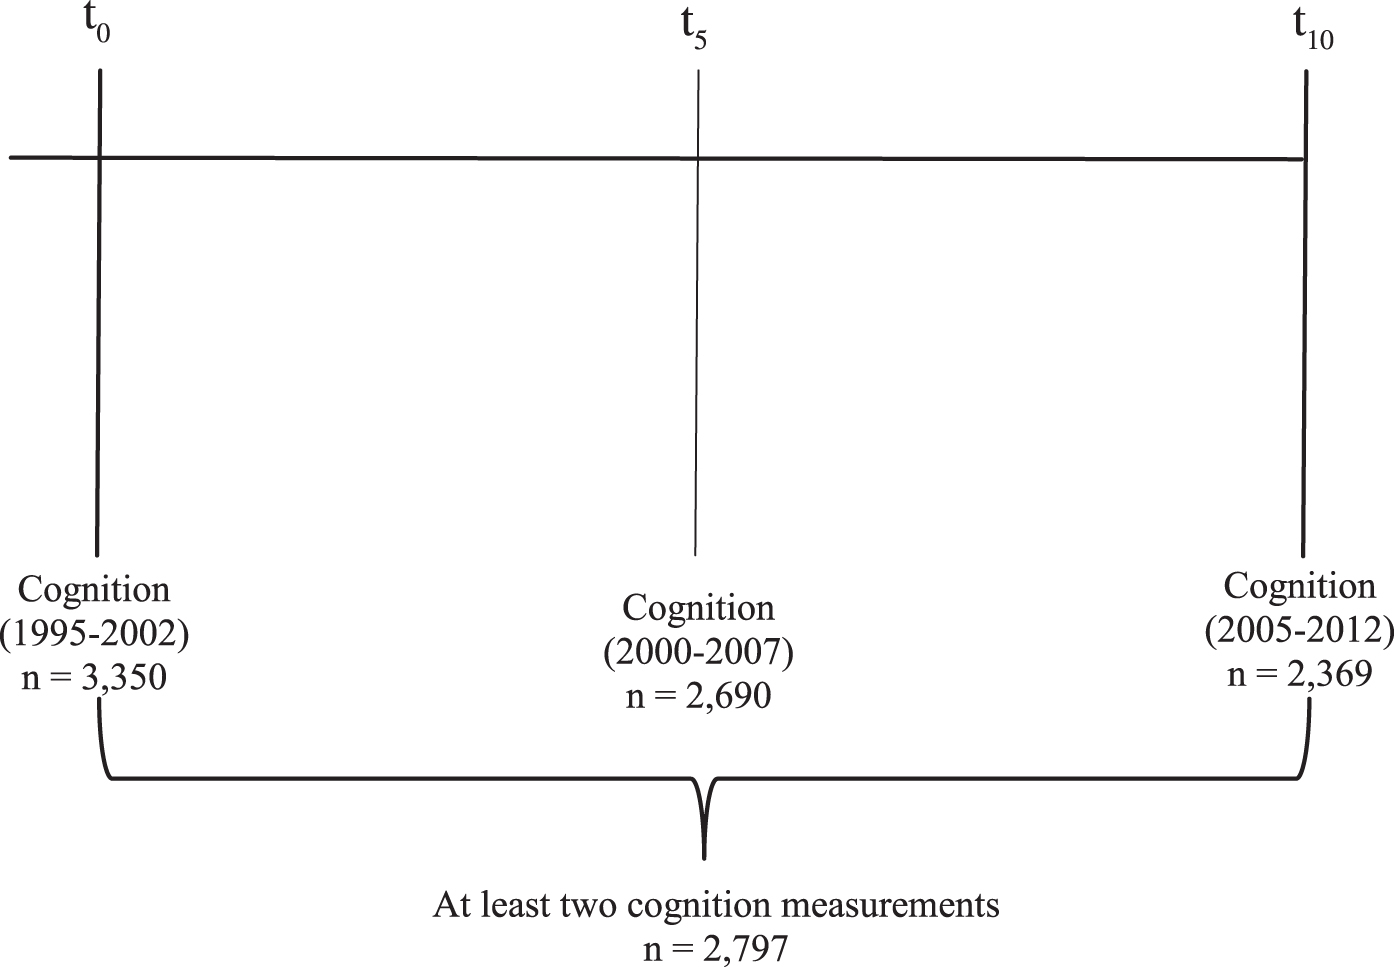 Timeline of the cognitive tests.